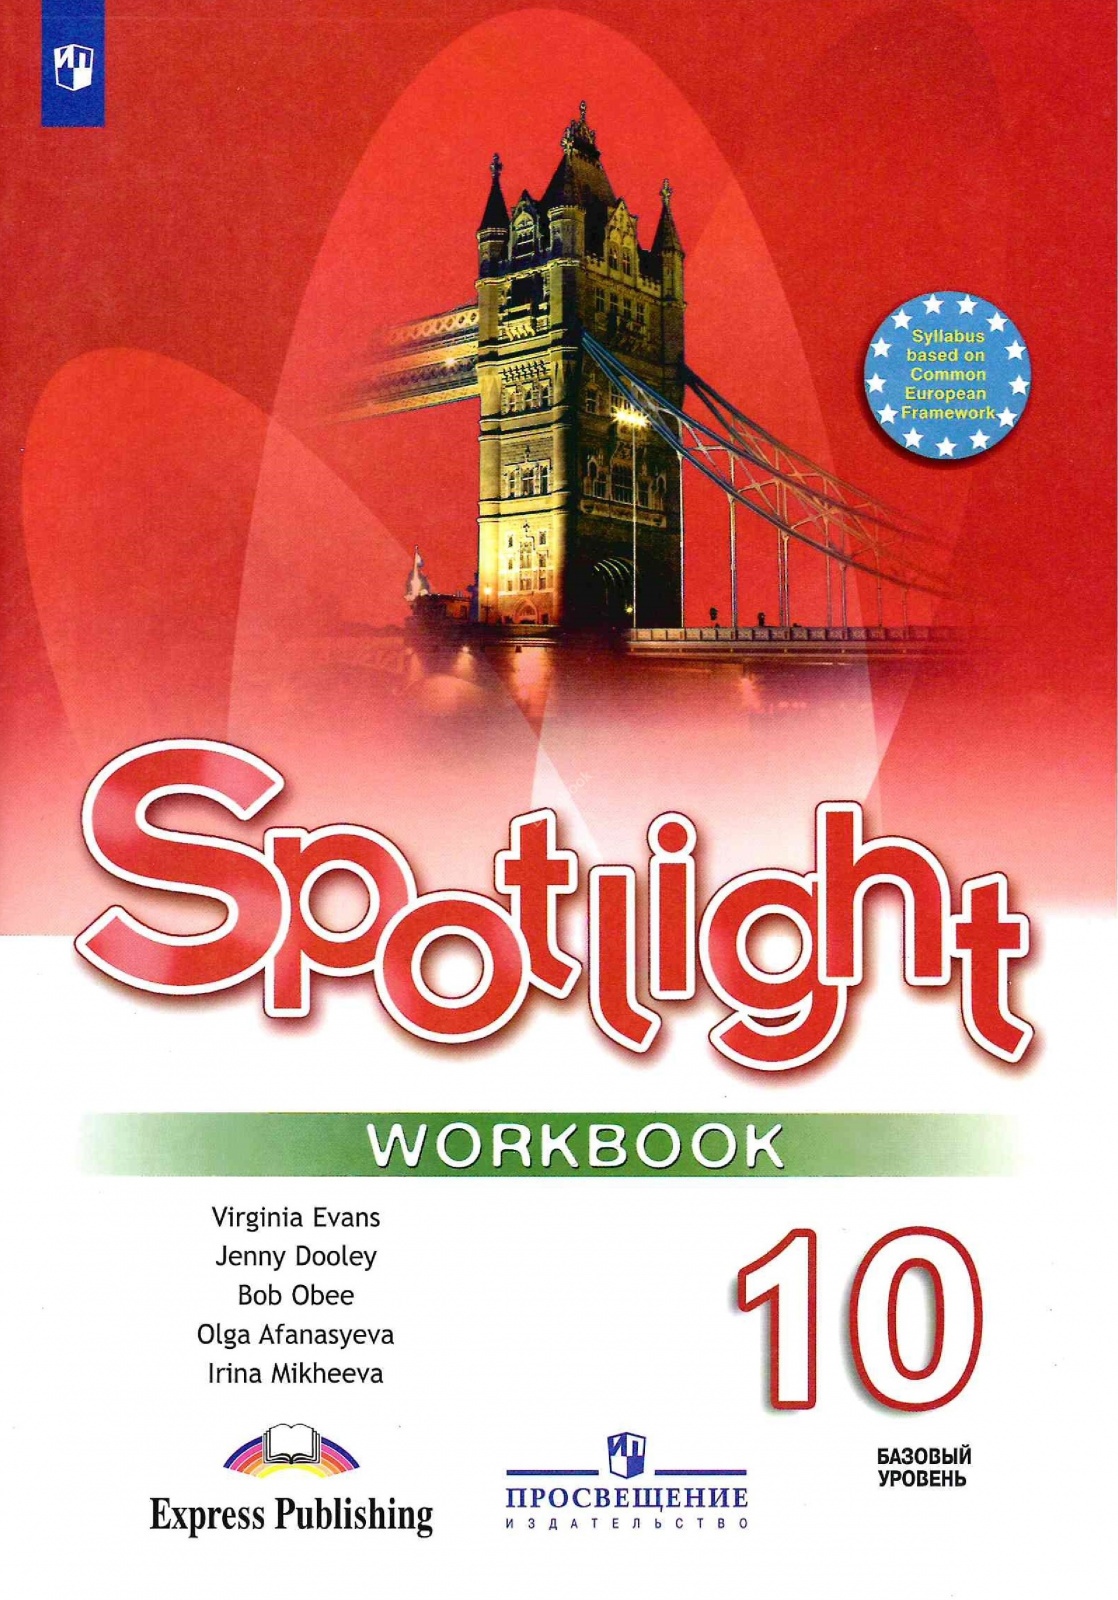 Страница 69 английский дули. Workbook Spotlight 5 класс ваулина. Spotlight 5 Workbook английский язык Эванс. Англ 5 класс рабочая тетрадь Spotlight. Тетради для английского языка 5 класс спотлайт.